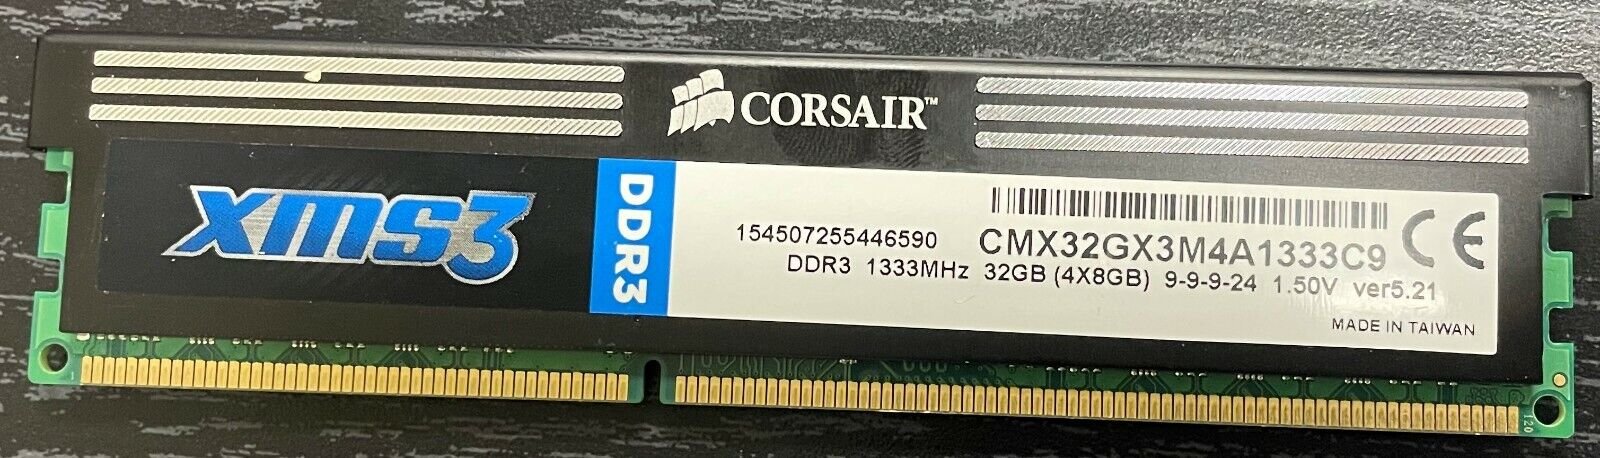 Corsair XMS3 DDR3 1333MHz 8GB Desktop Memory RAM